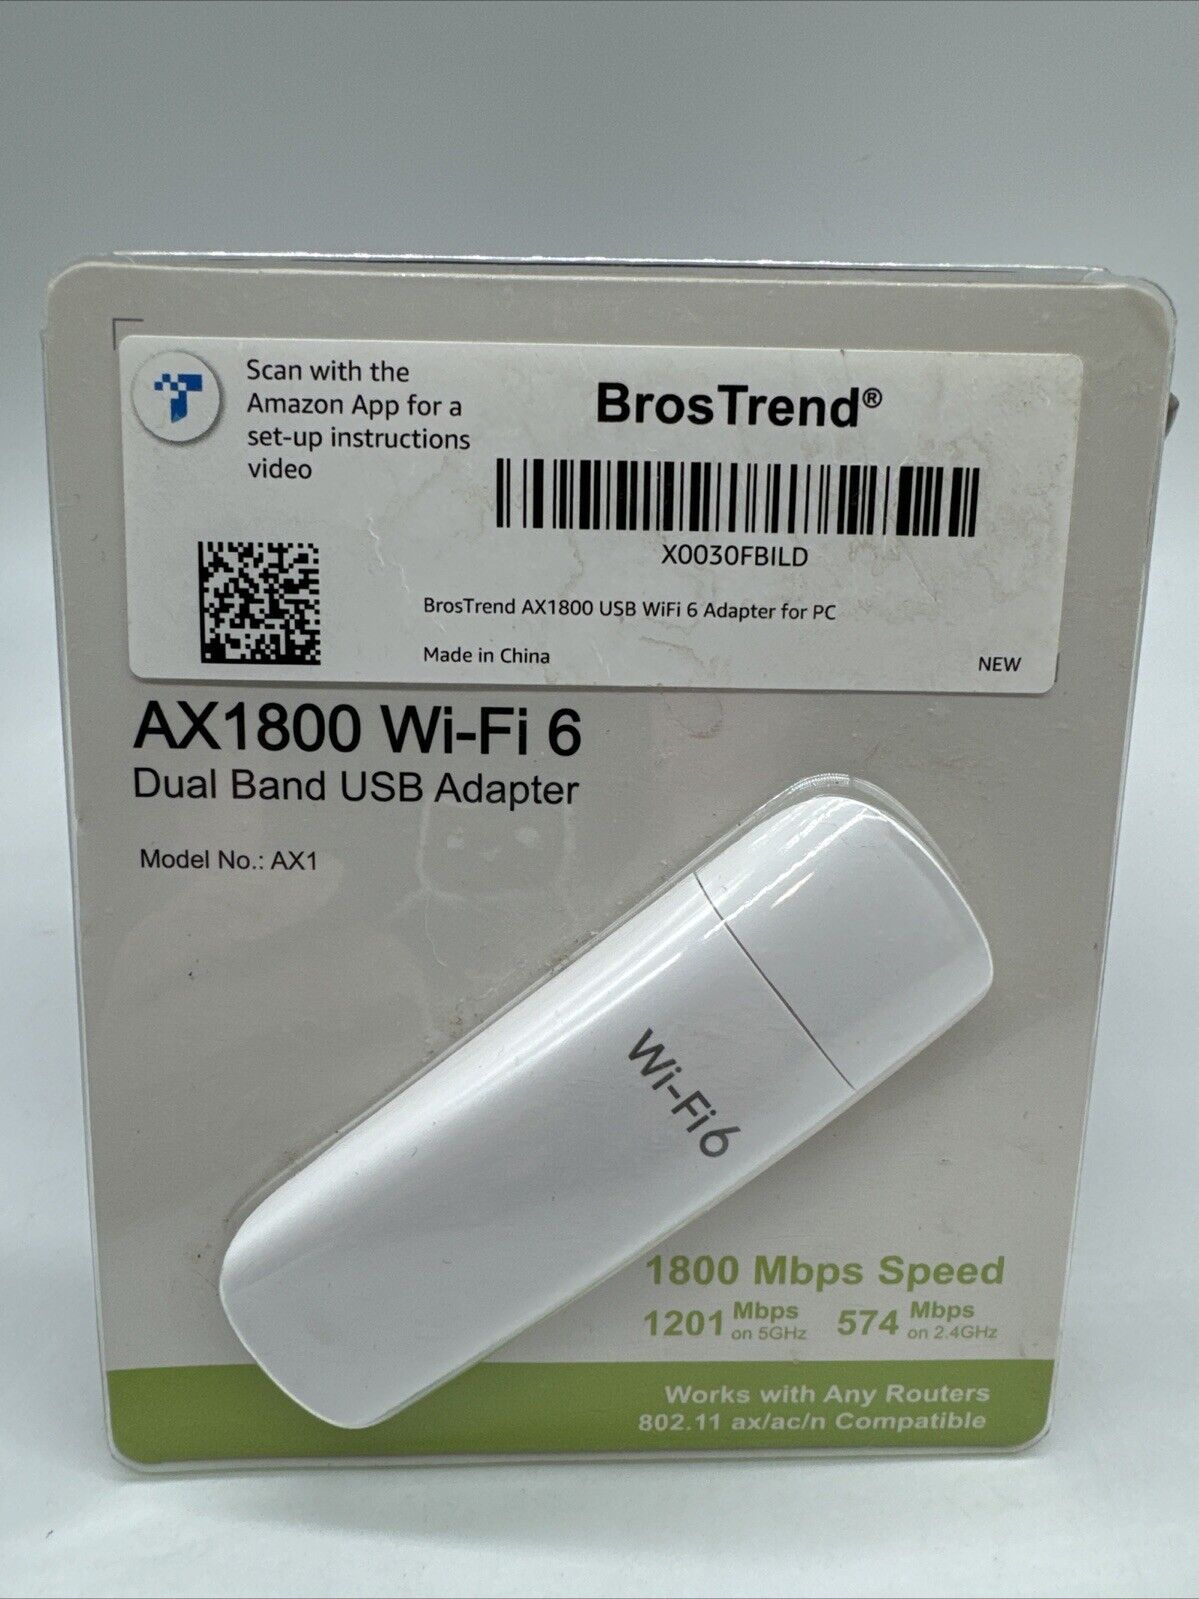 BrosTrend AX1800 WIFI 6 USB Dual Band USB Adapter. Model No.:AX1